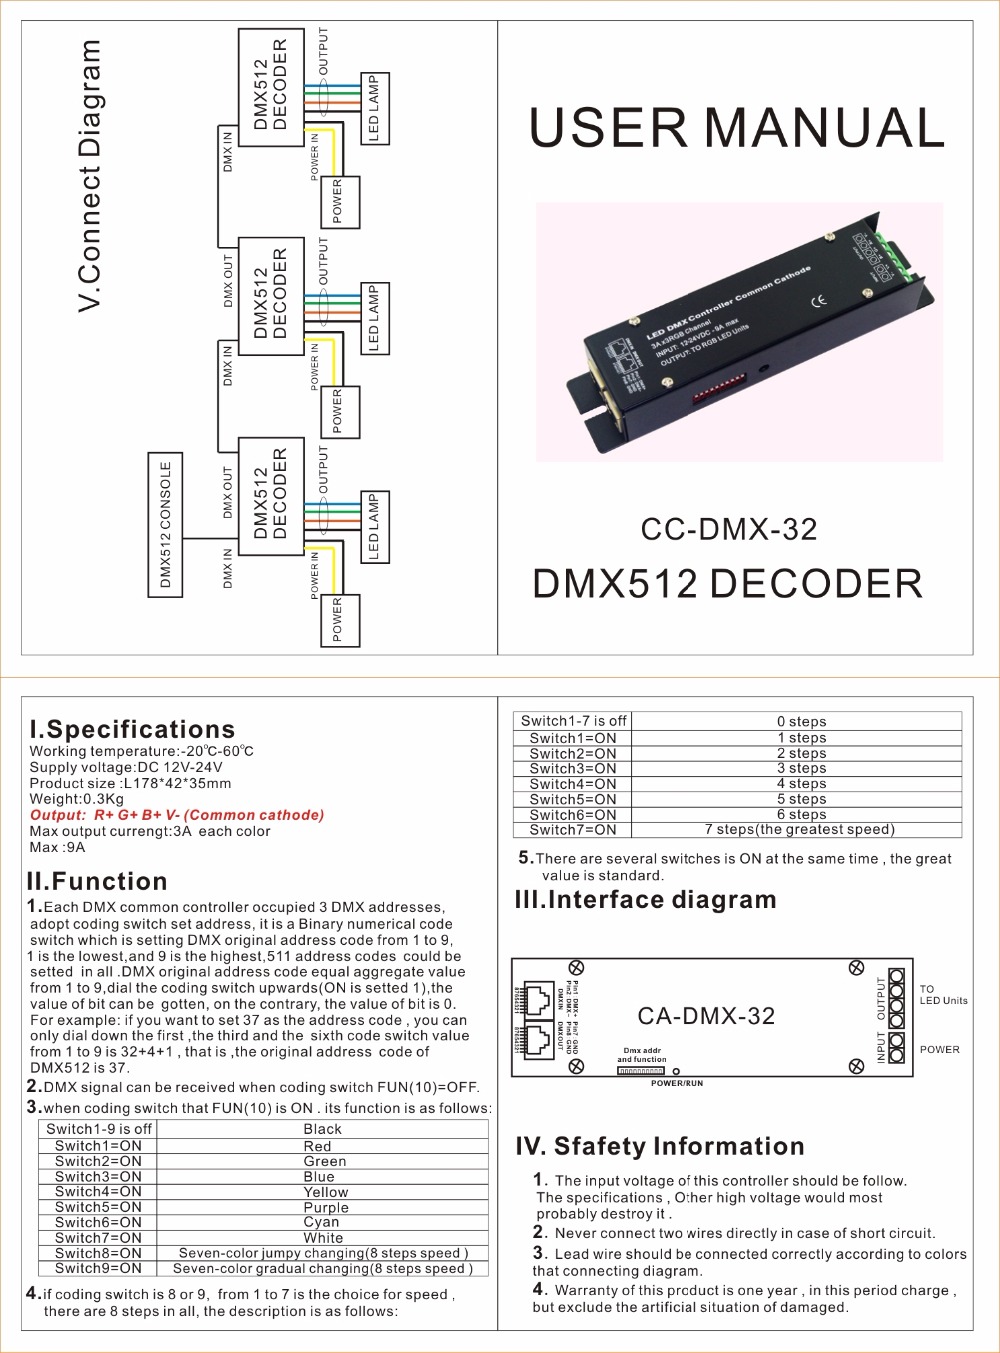 New_DMX_Controllers_WS_CC_DMX_32_1